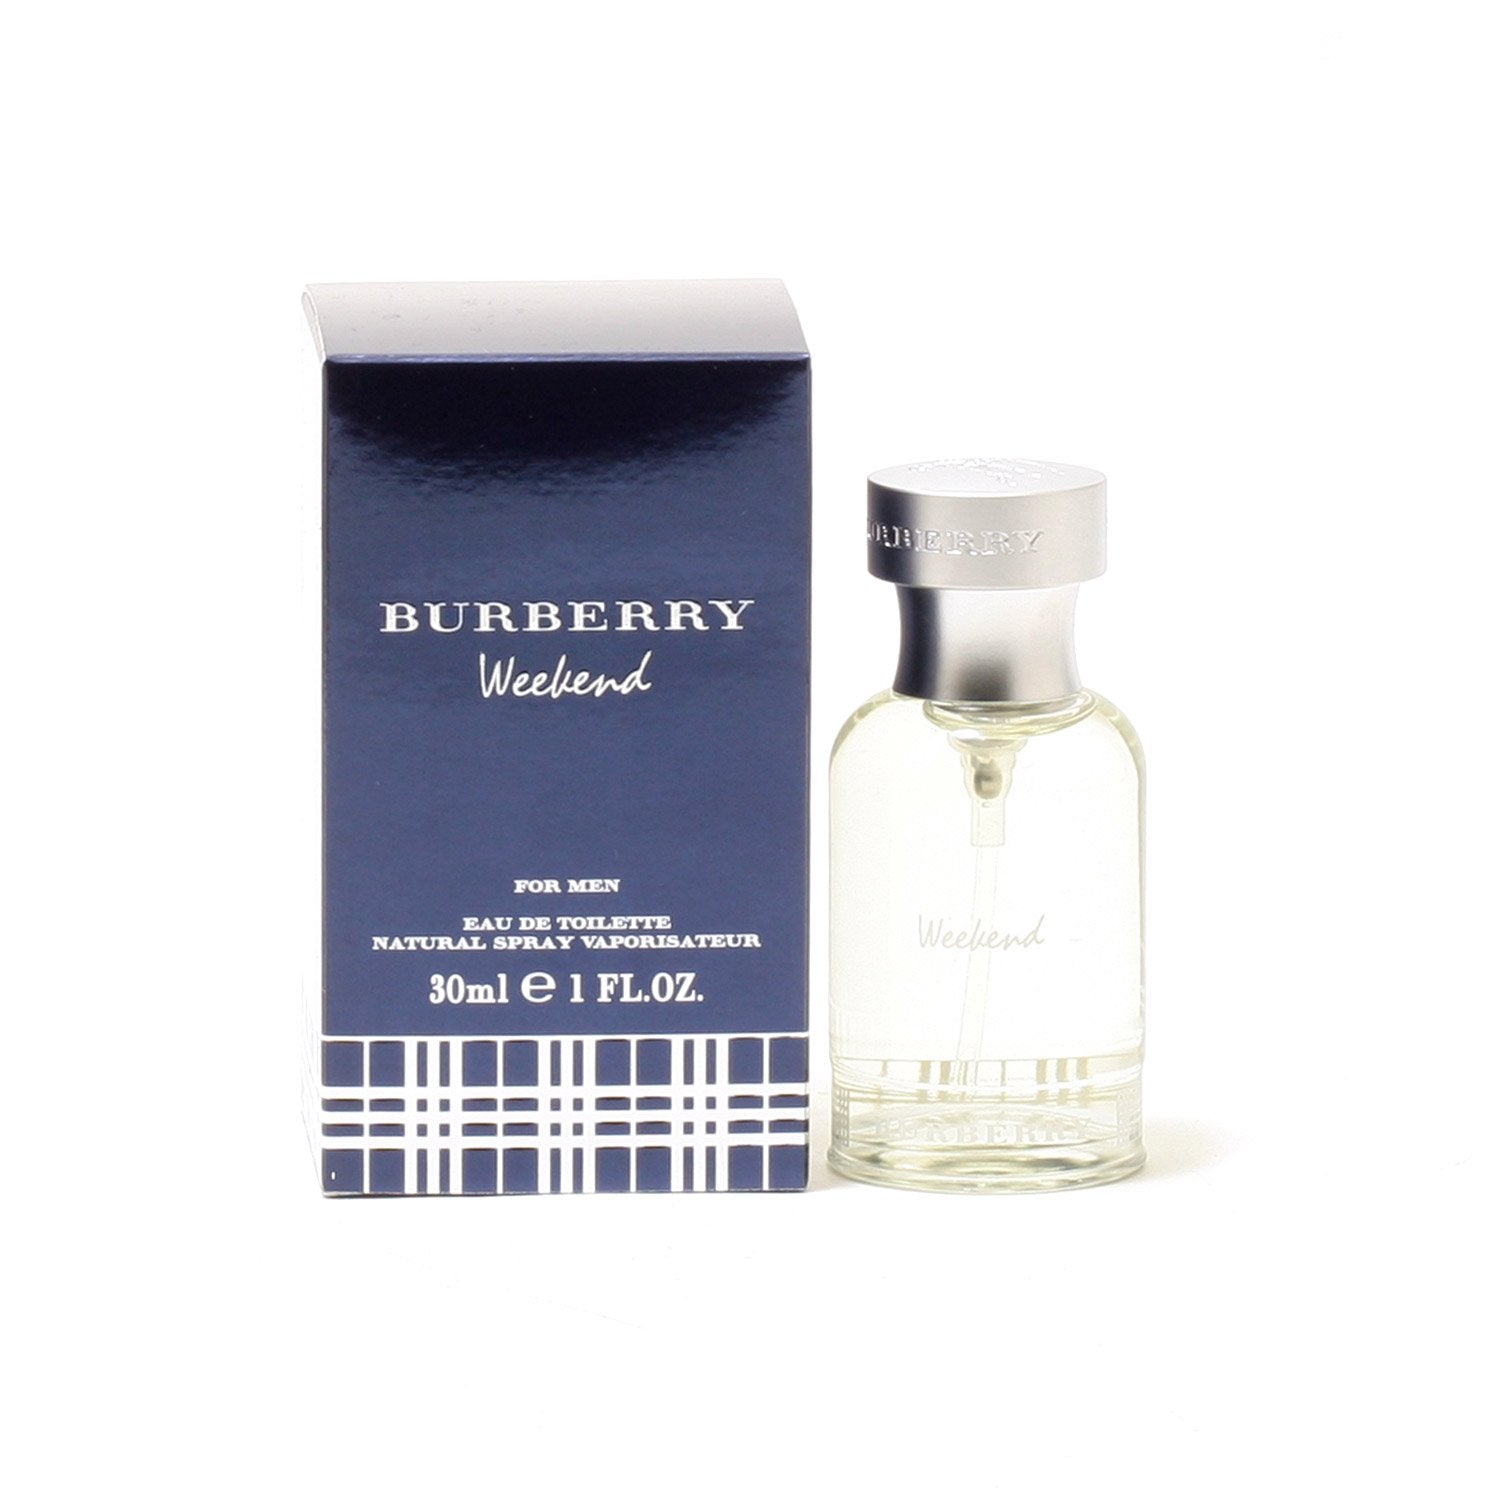 BURBERRY WEEKEND FOR MEN - Fragrance DE EAU TOILETTE SPRAY – Room